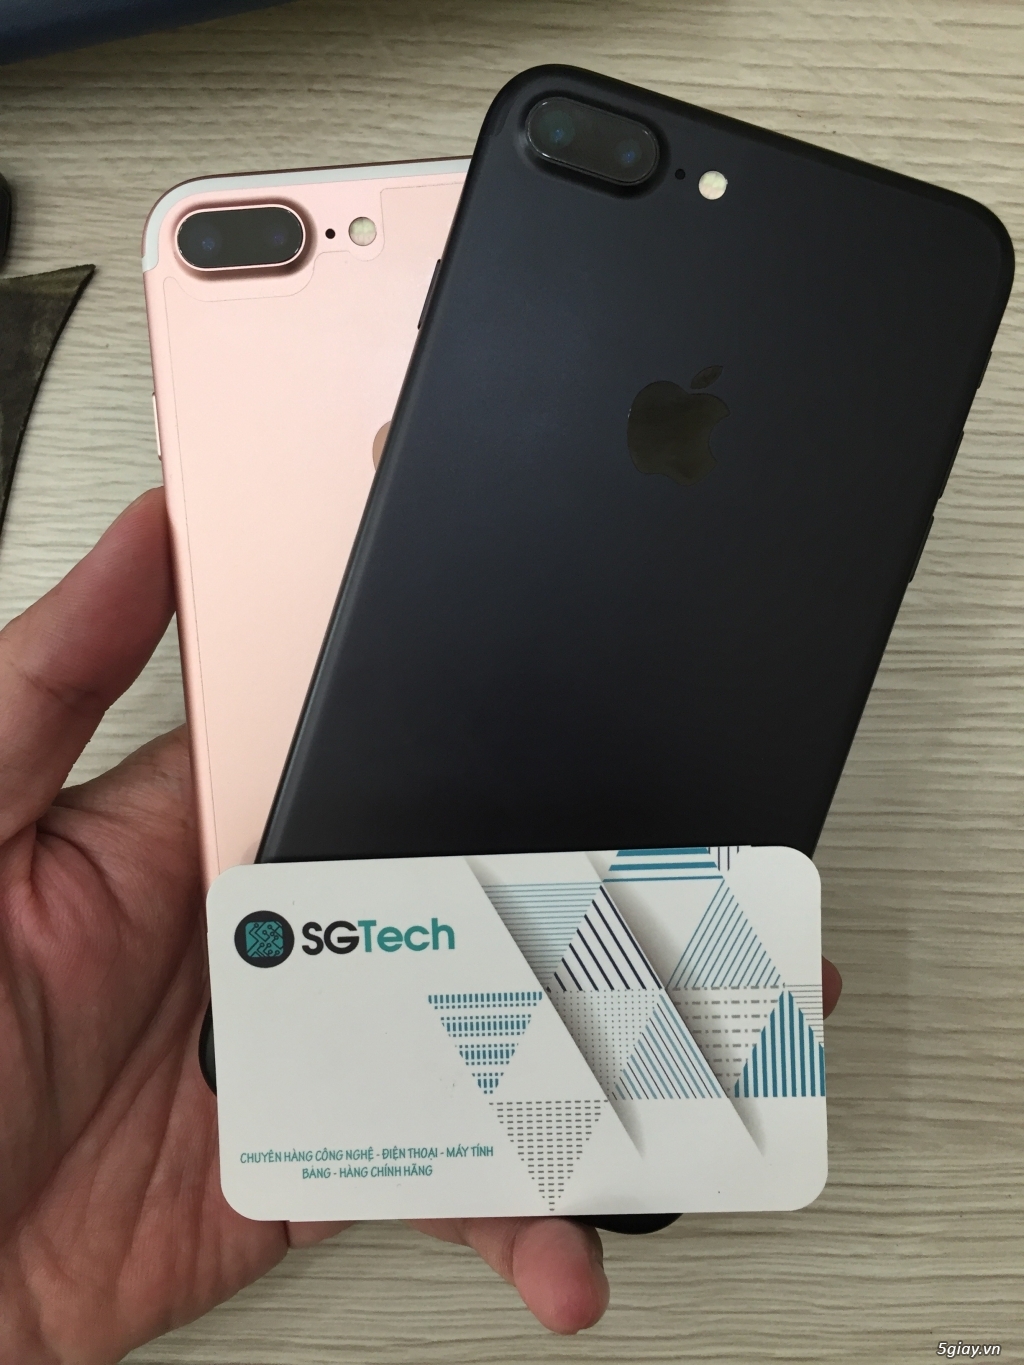 SGTECH - Iphone 5c/5s/6/6+/6s/6s+/7/7+ Lock, qte đủ màu - 37